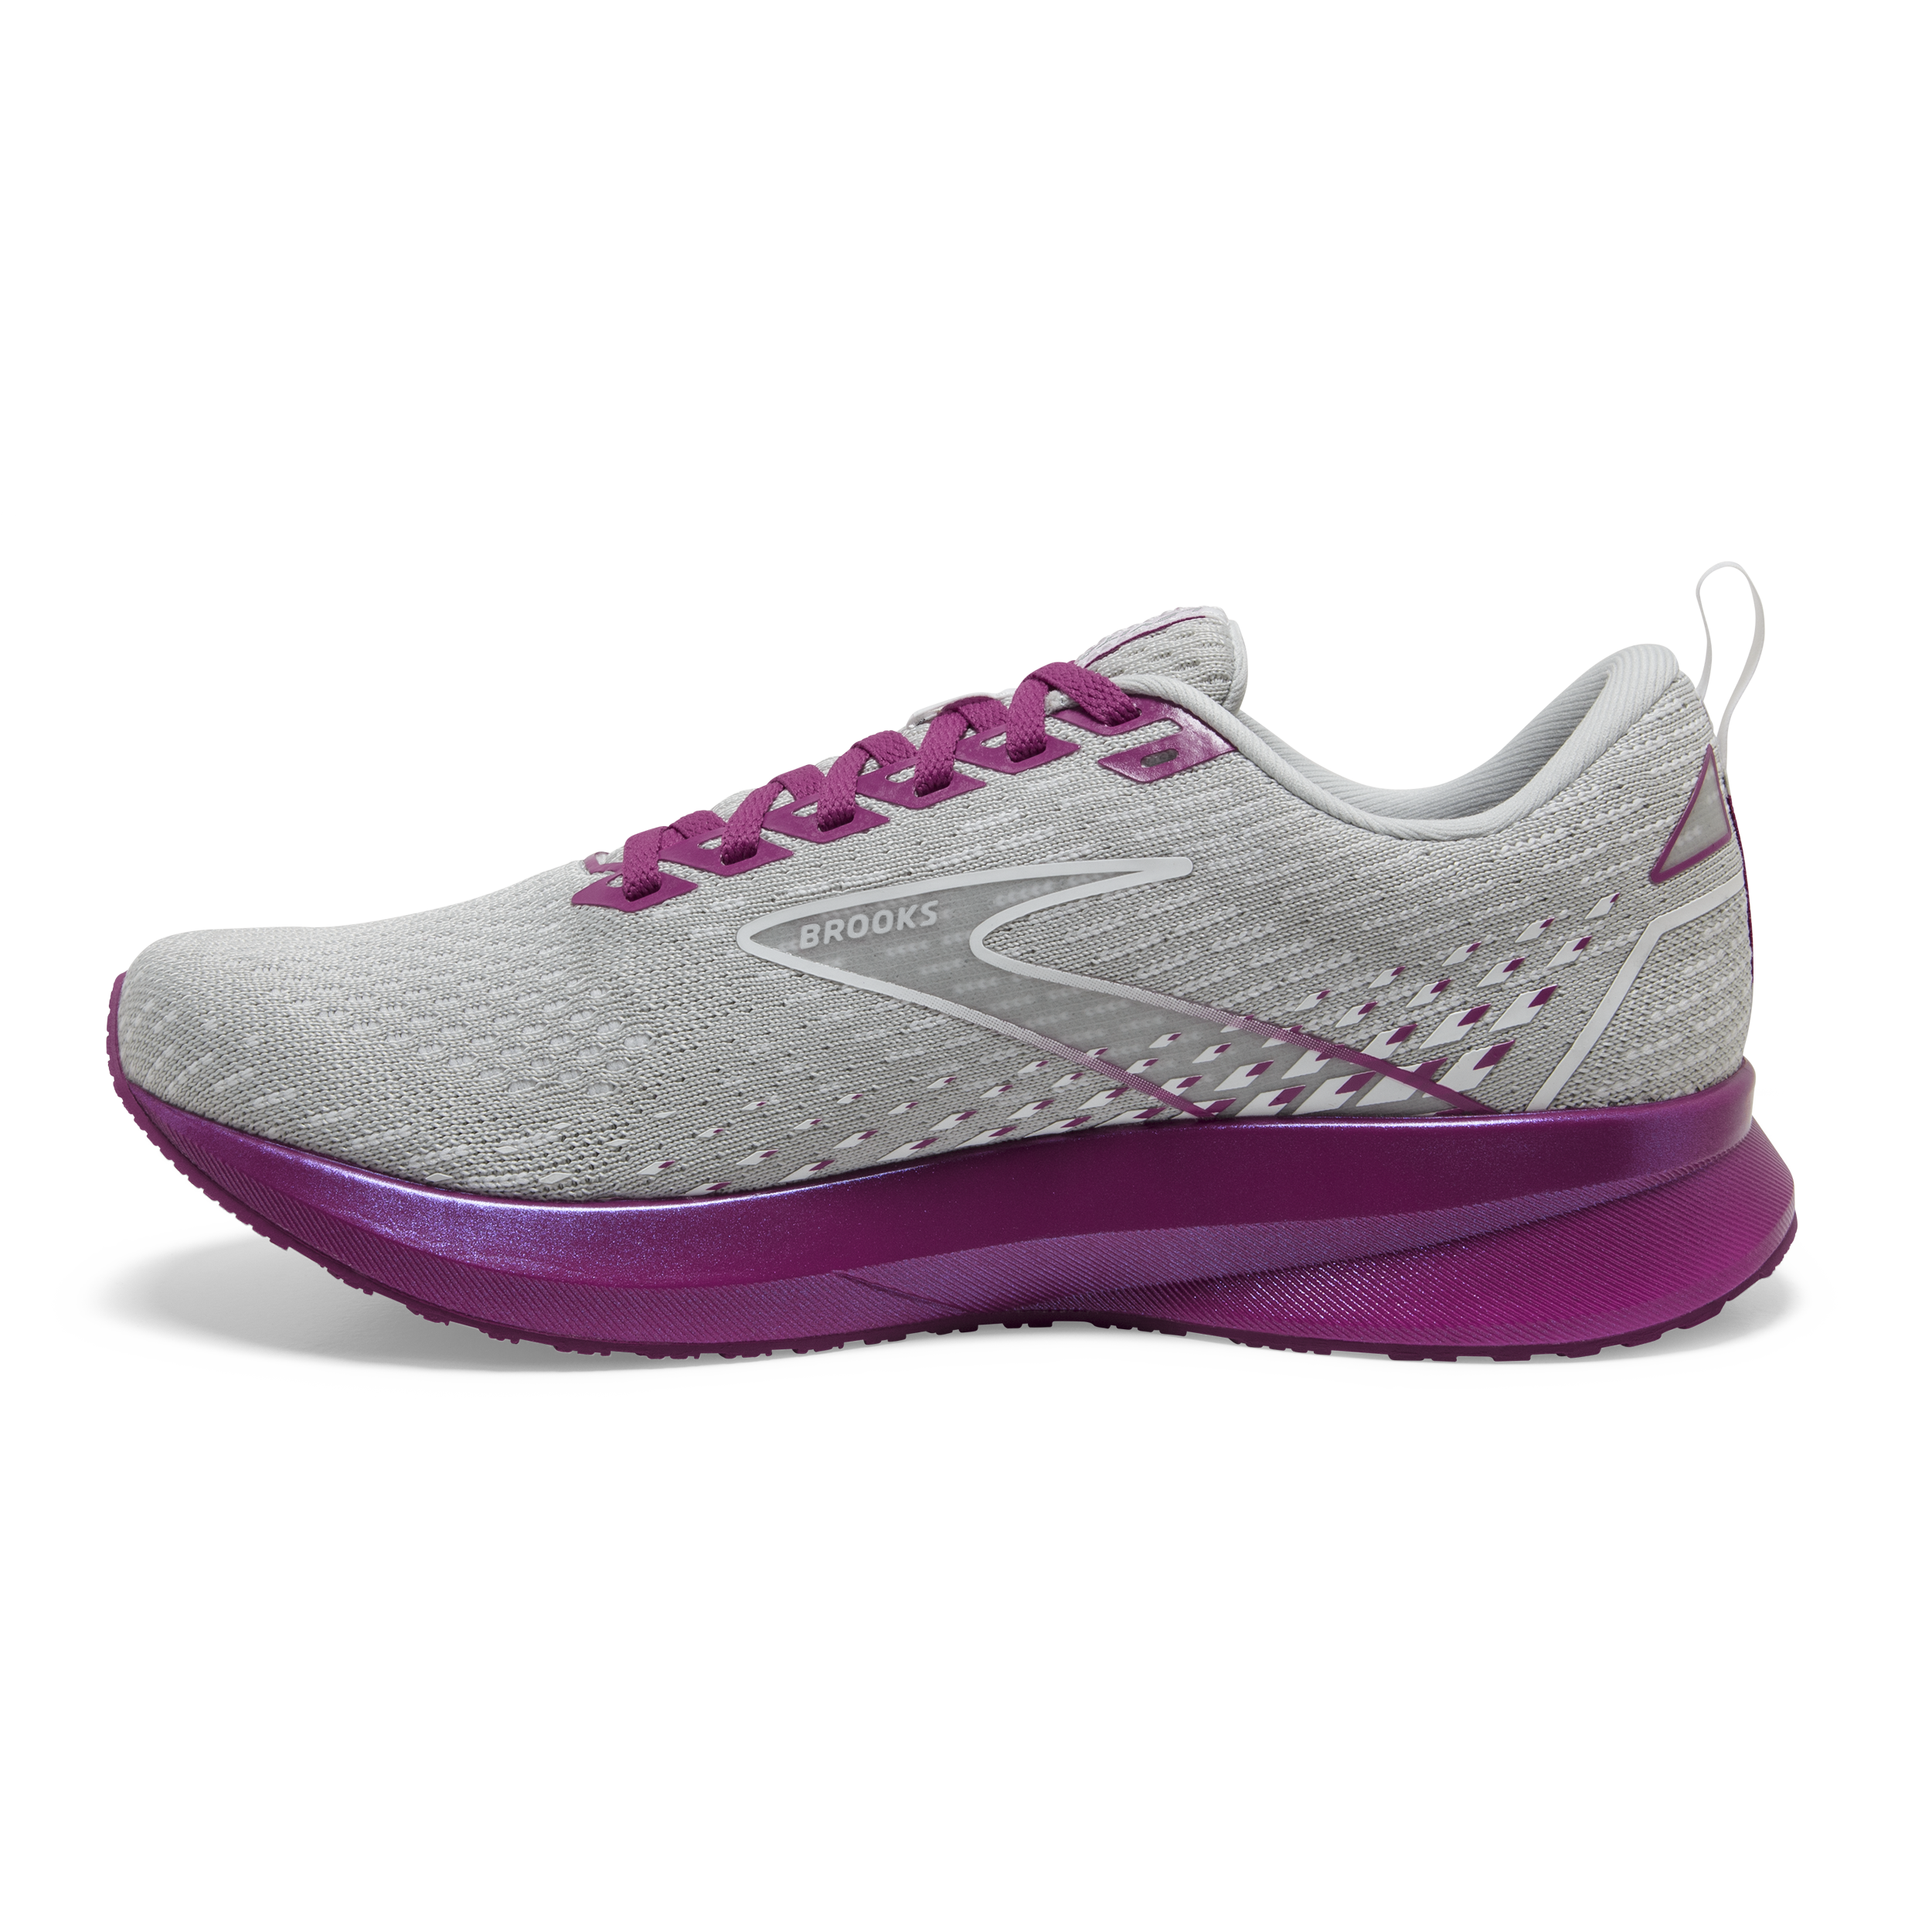 Brooks Womens Levitate 2 Purple Trainers Gym Sports Running Shoes 7.5 UK 